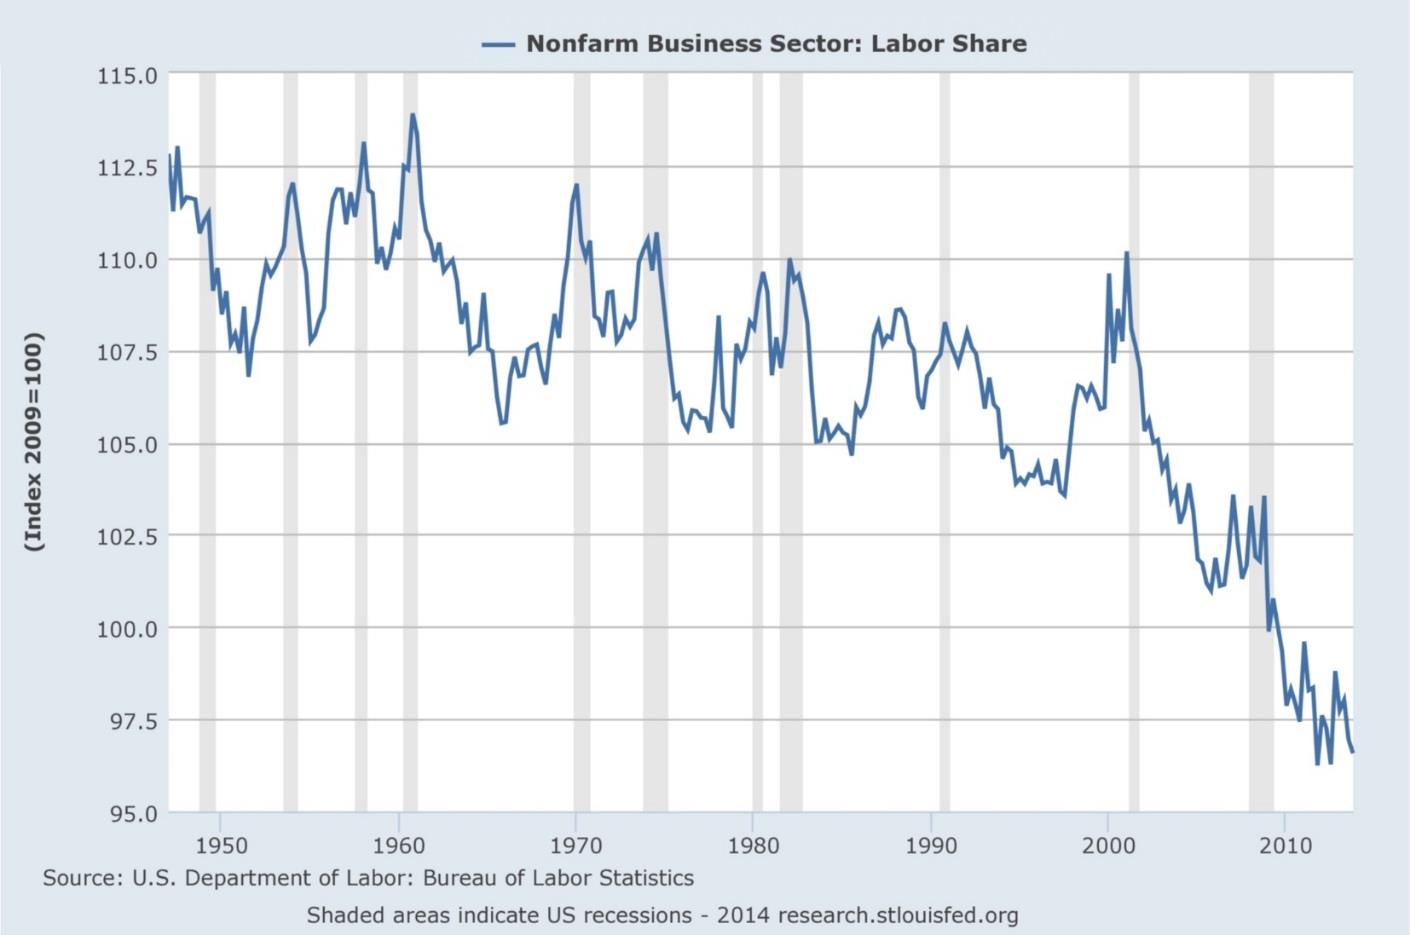 Nonfarm Business Sector: Labor Share